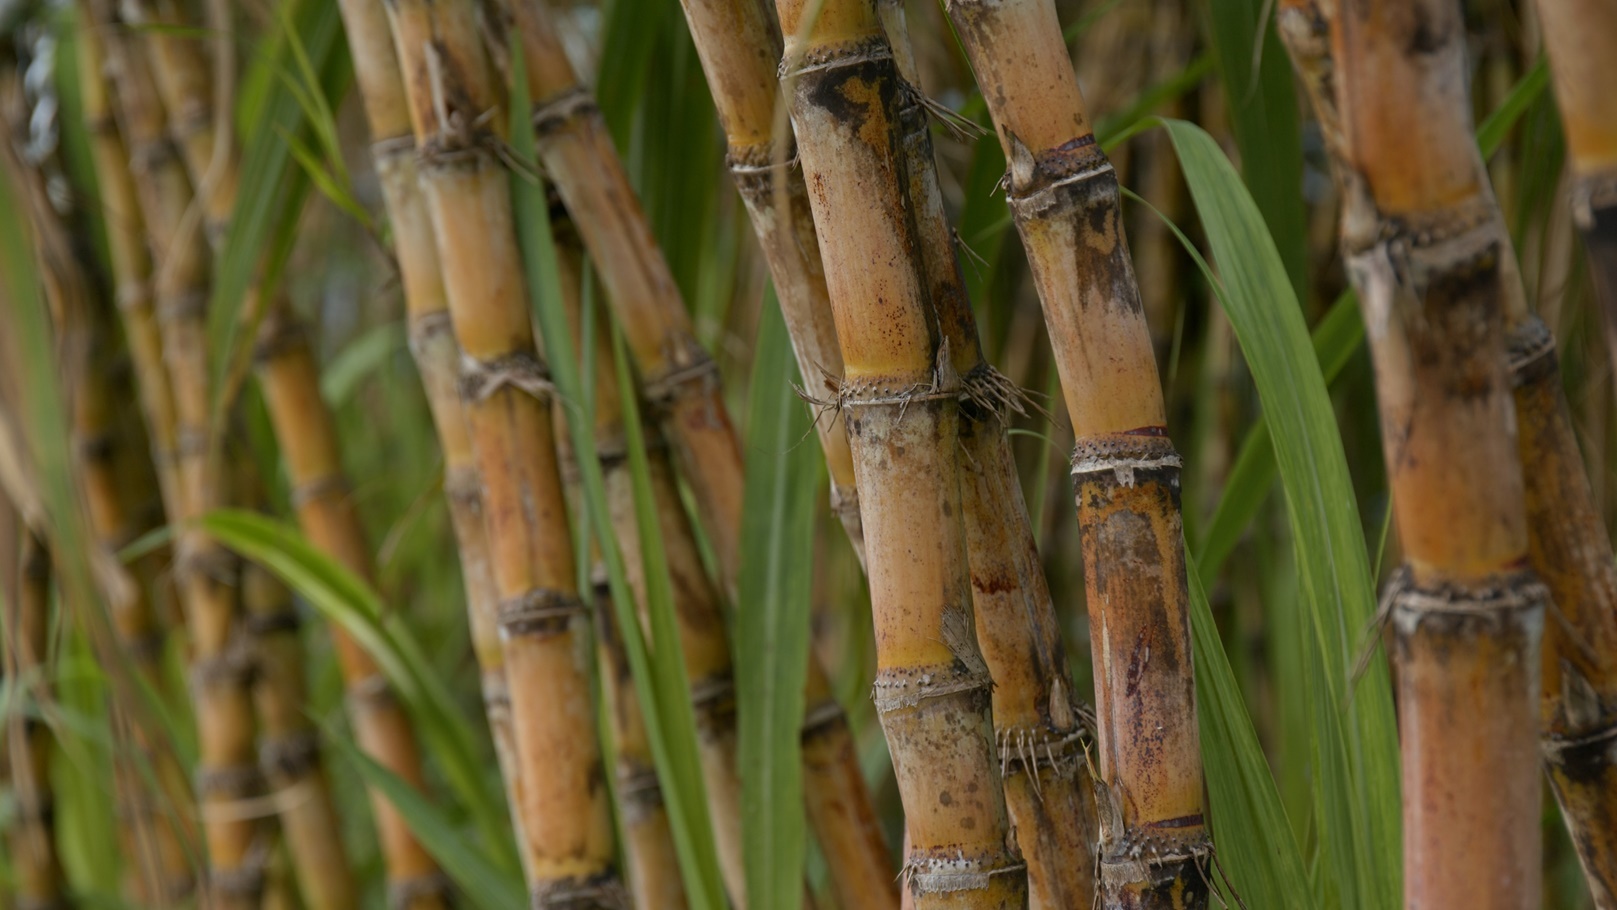 sugar-cane-farm-2021-08-29-05-18-11-utc